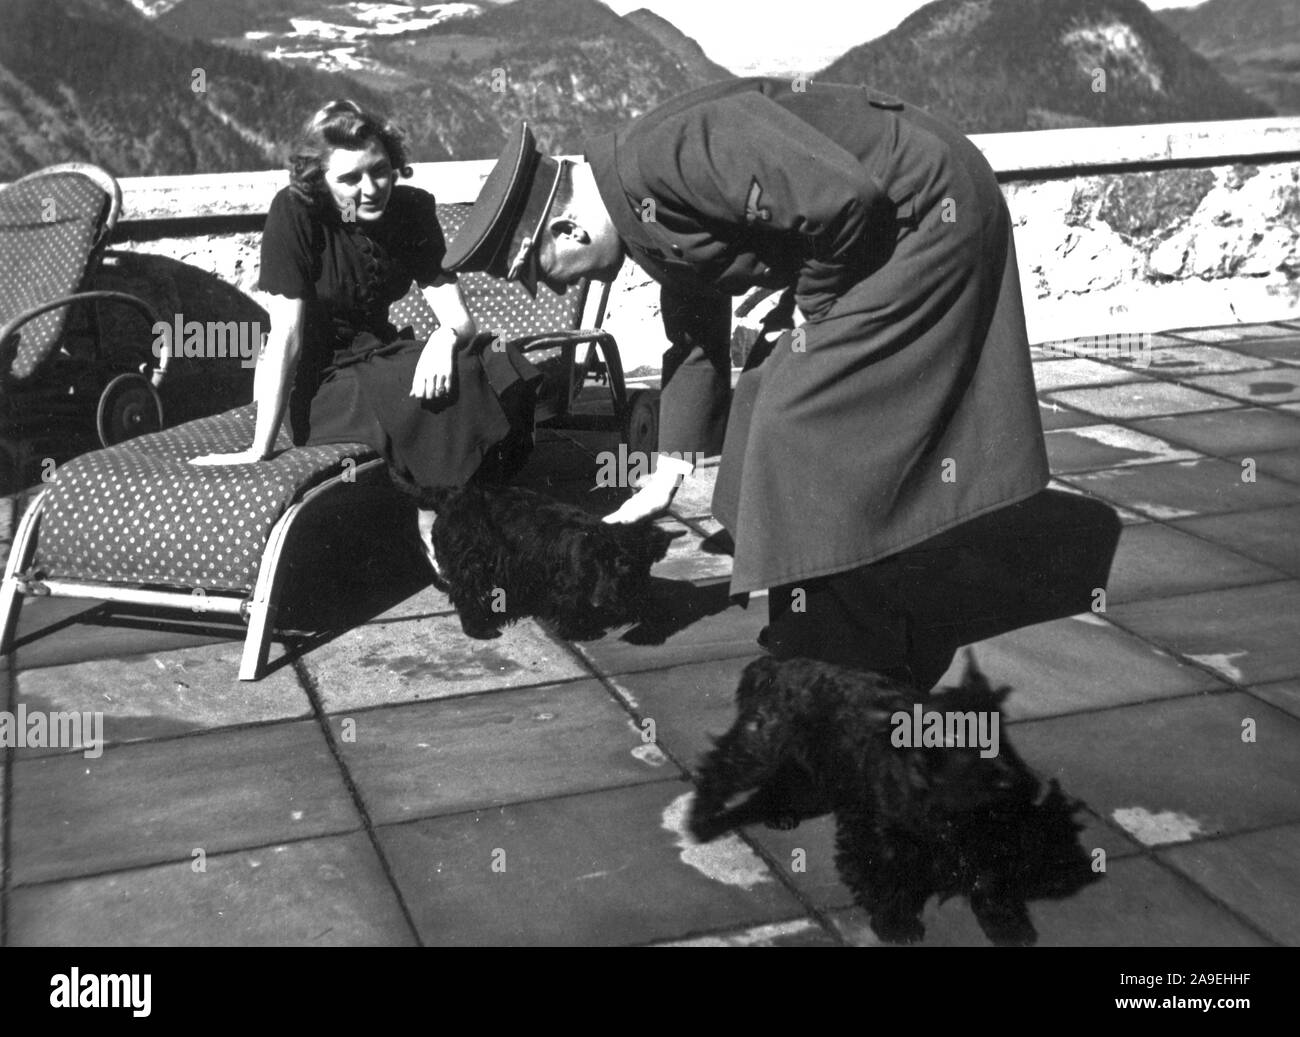 Eva Braun Sammlung (dvadvadaset) - Adolf Hitler petting Eva Brauns Scottish Terrier hunde Ca. 1930s oder 1940s Stockfoto